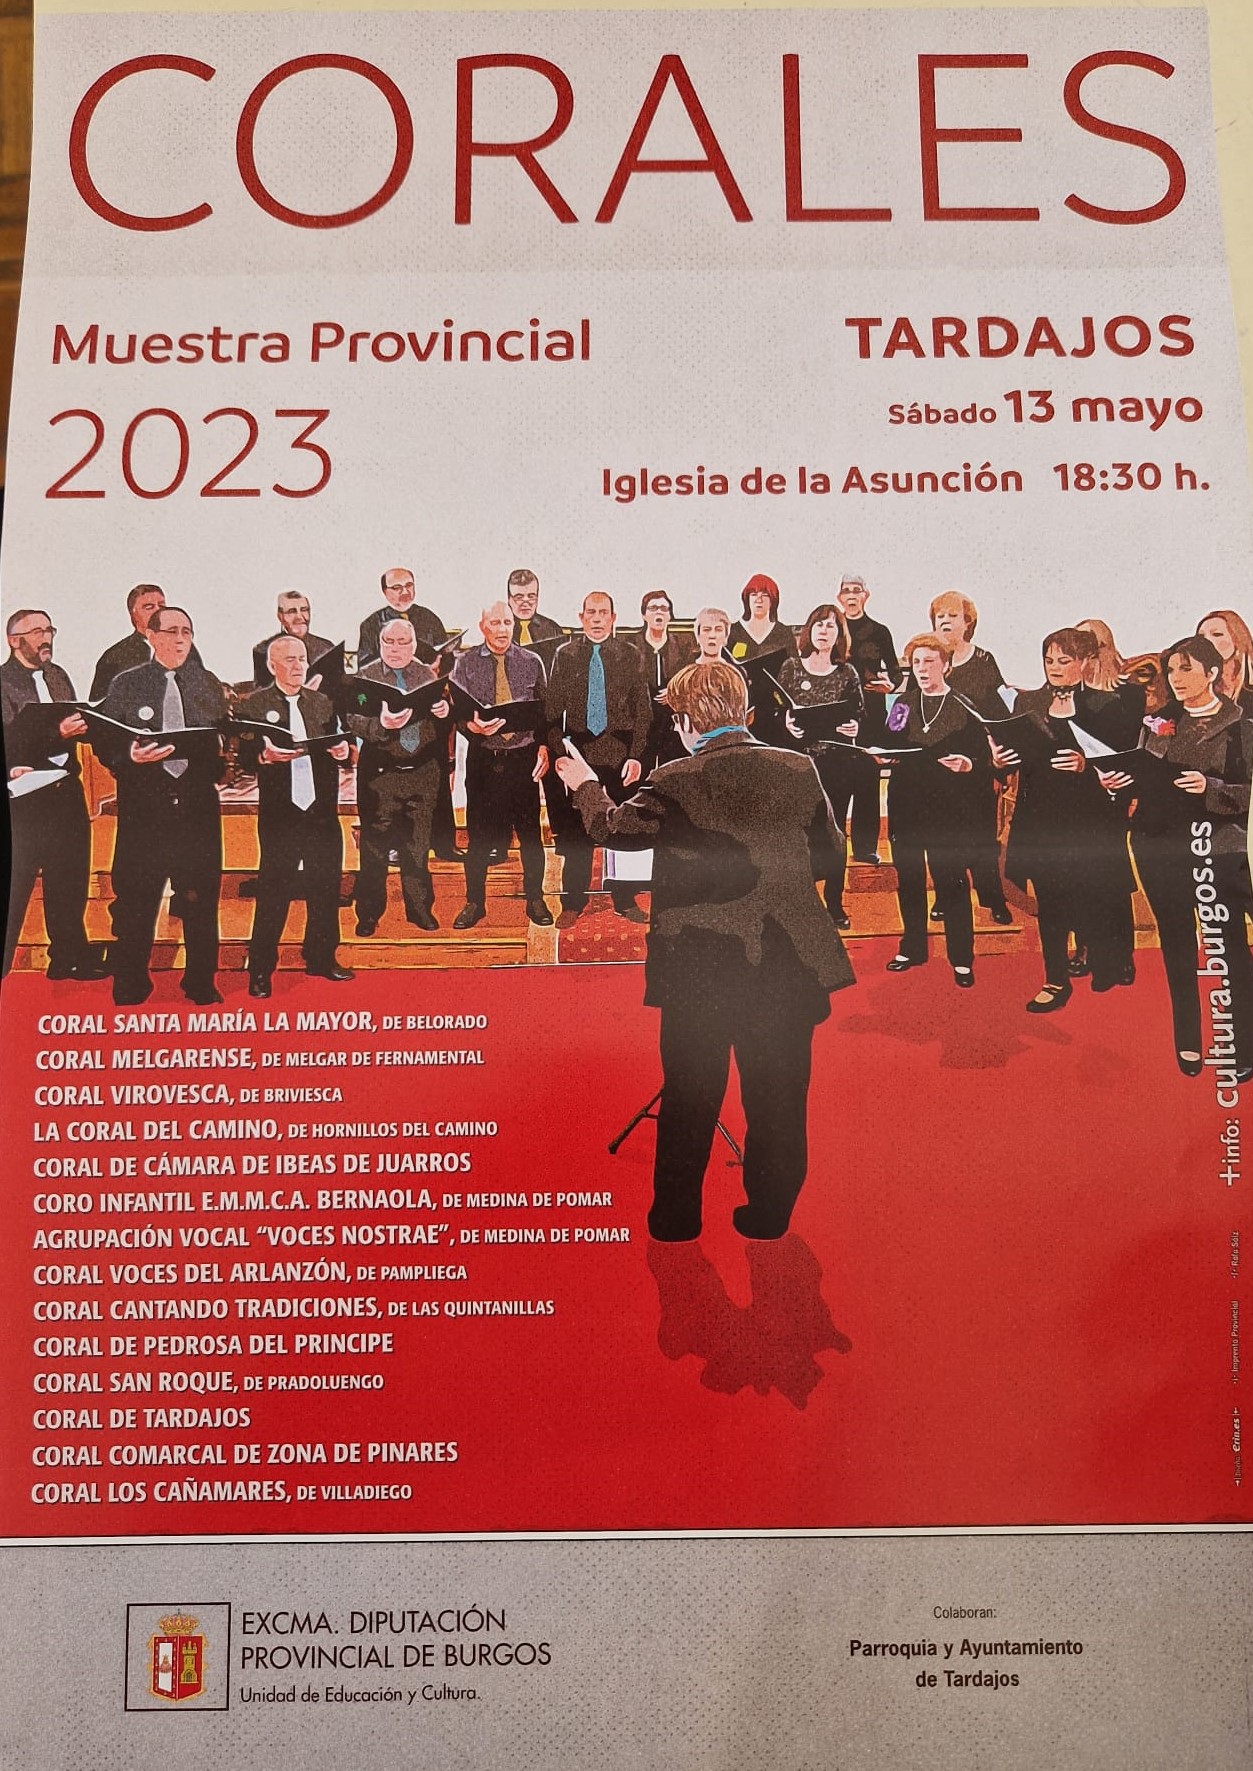 CORALES - MUESTRA PROVINCIAL 2023